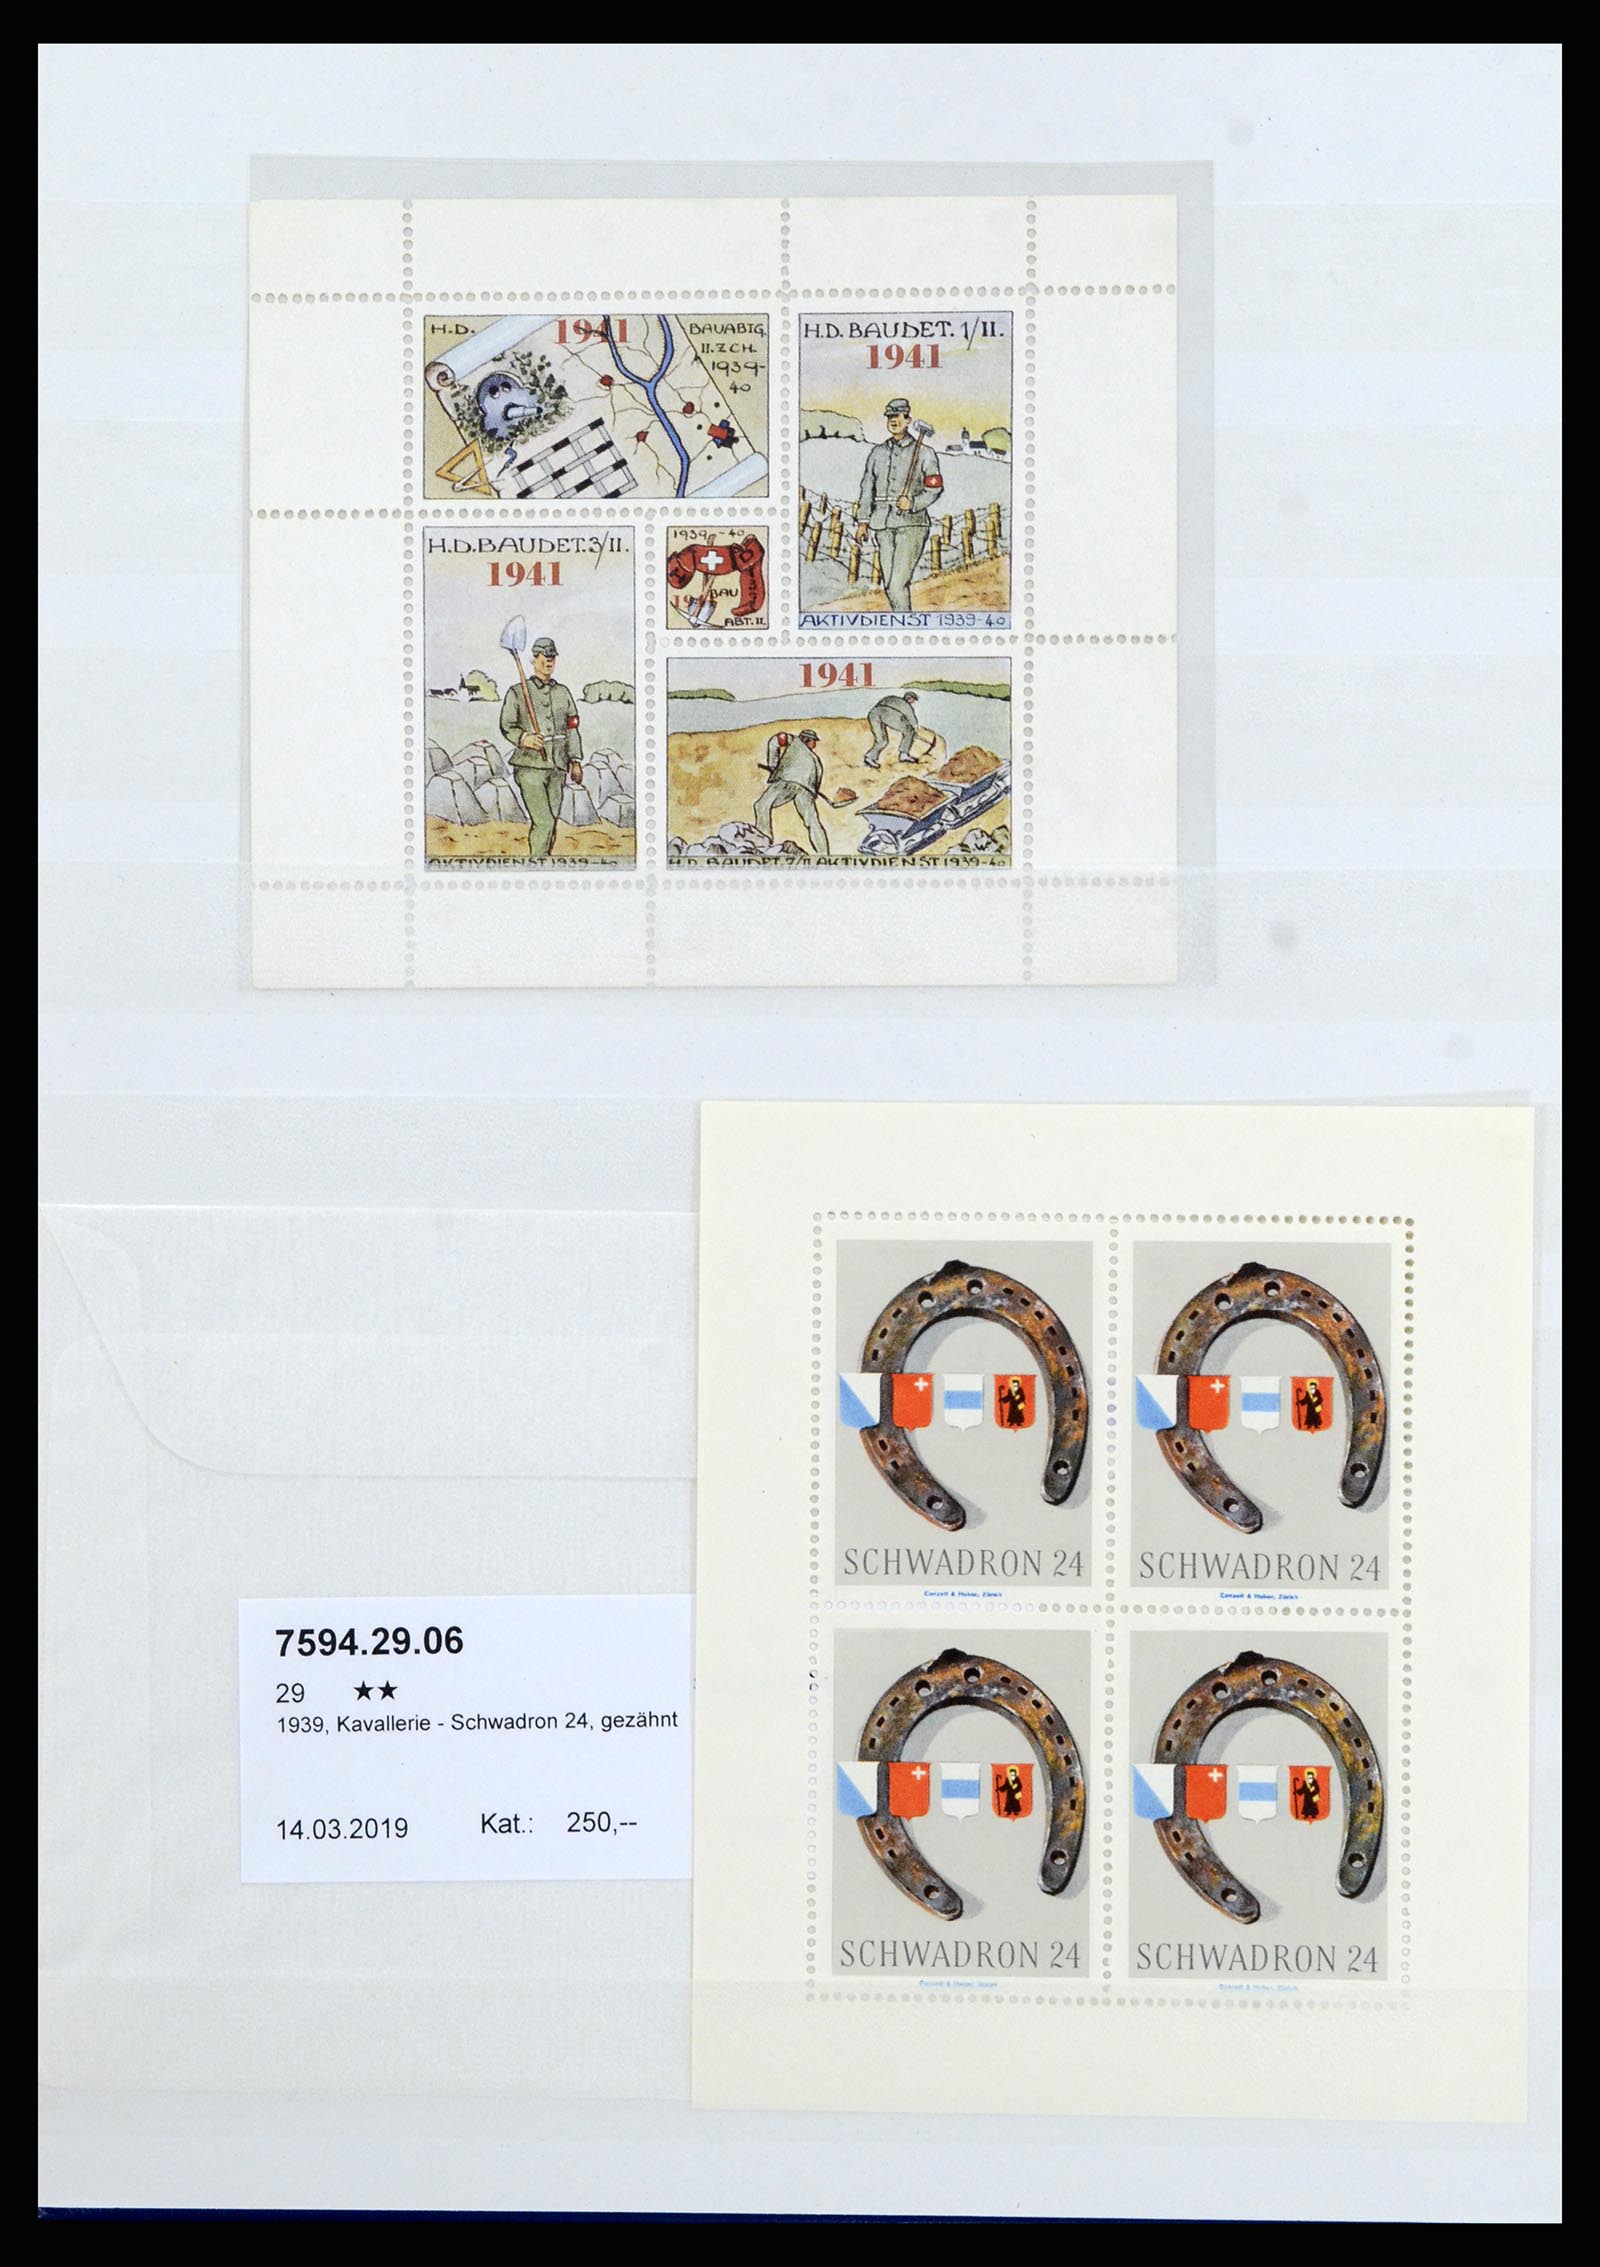 37149 021 - Stamp collection 37149 Switzerland soldier stamps 1914-1945.